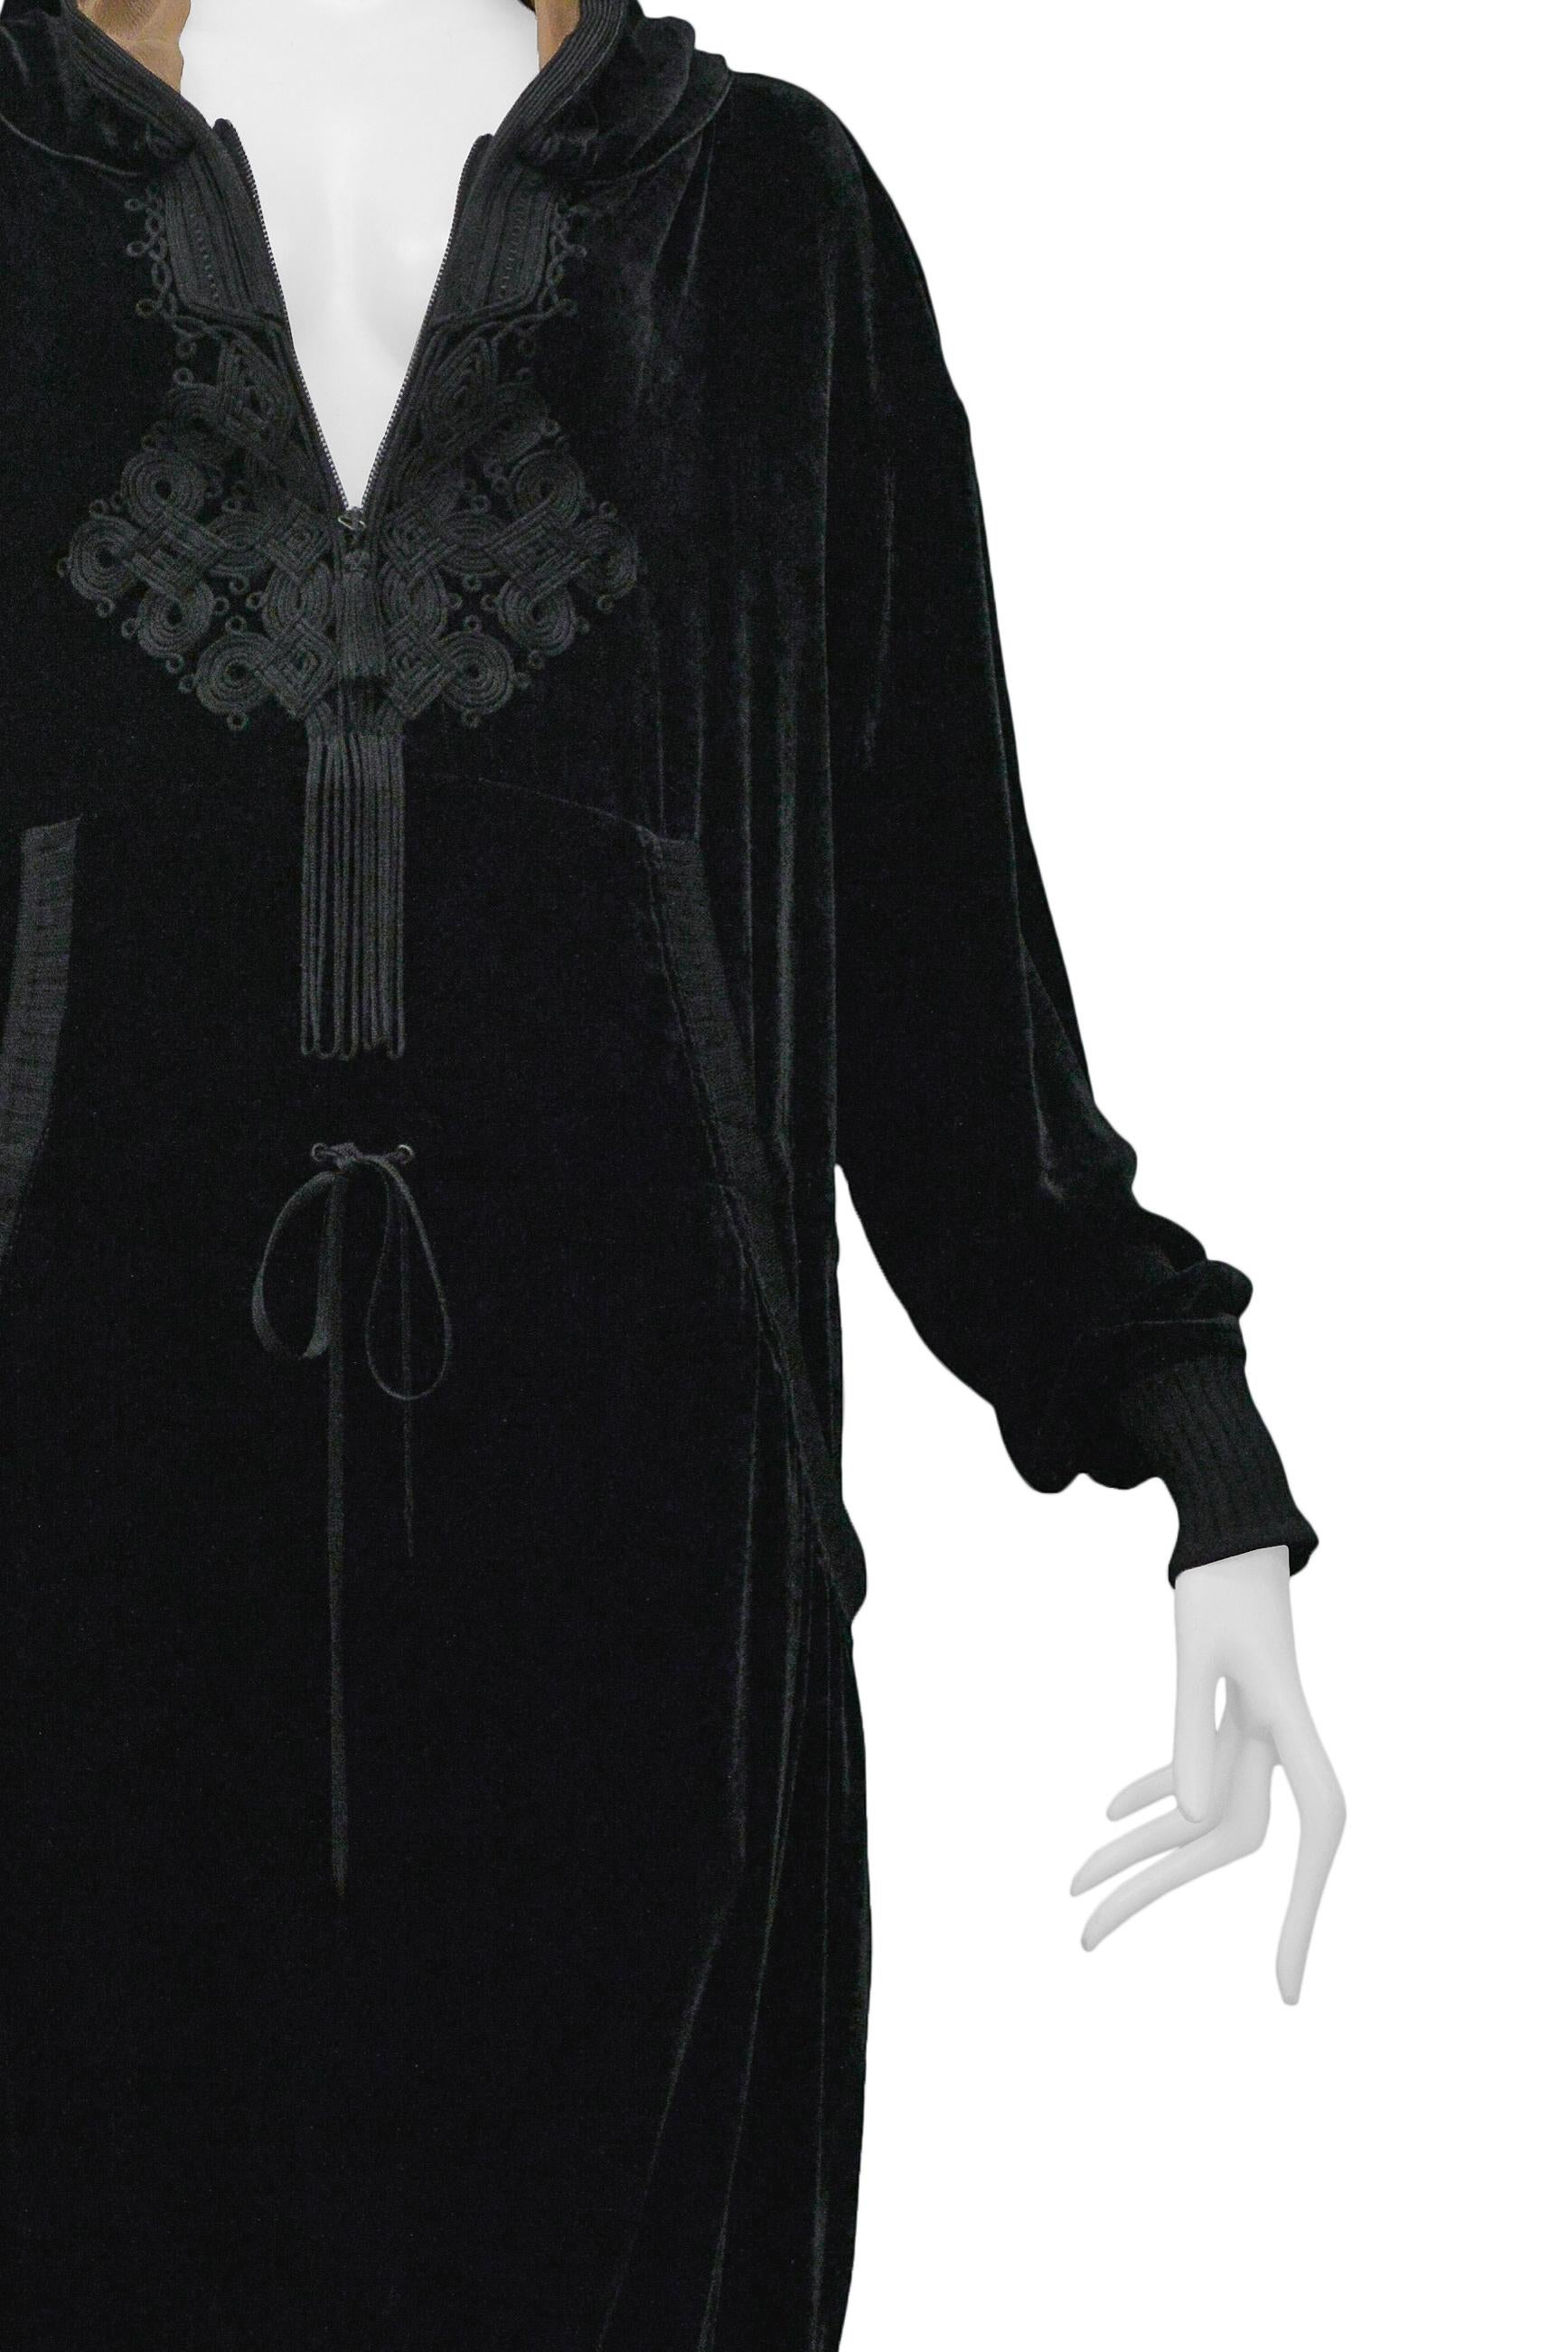 Jean Paul Gaultier Black Velvet Hoodie Tunic Dress 2010 For Sale 2